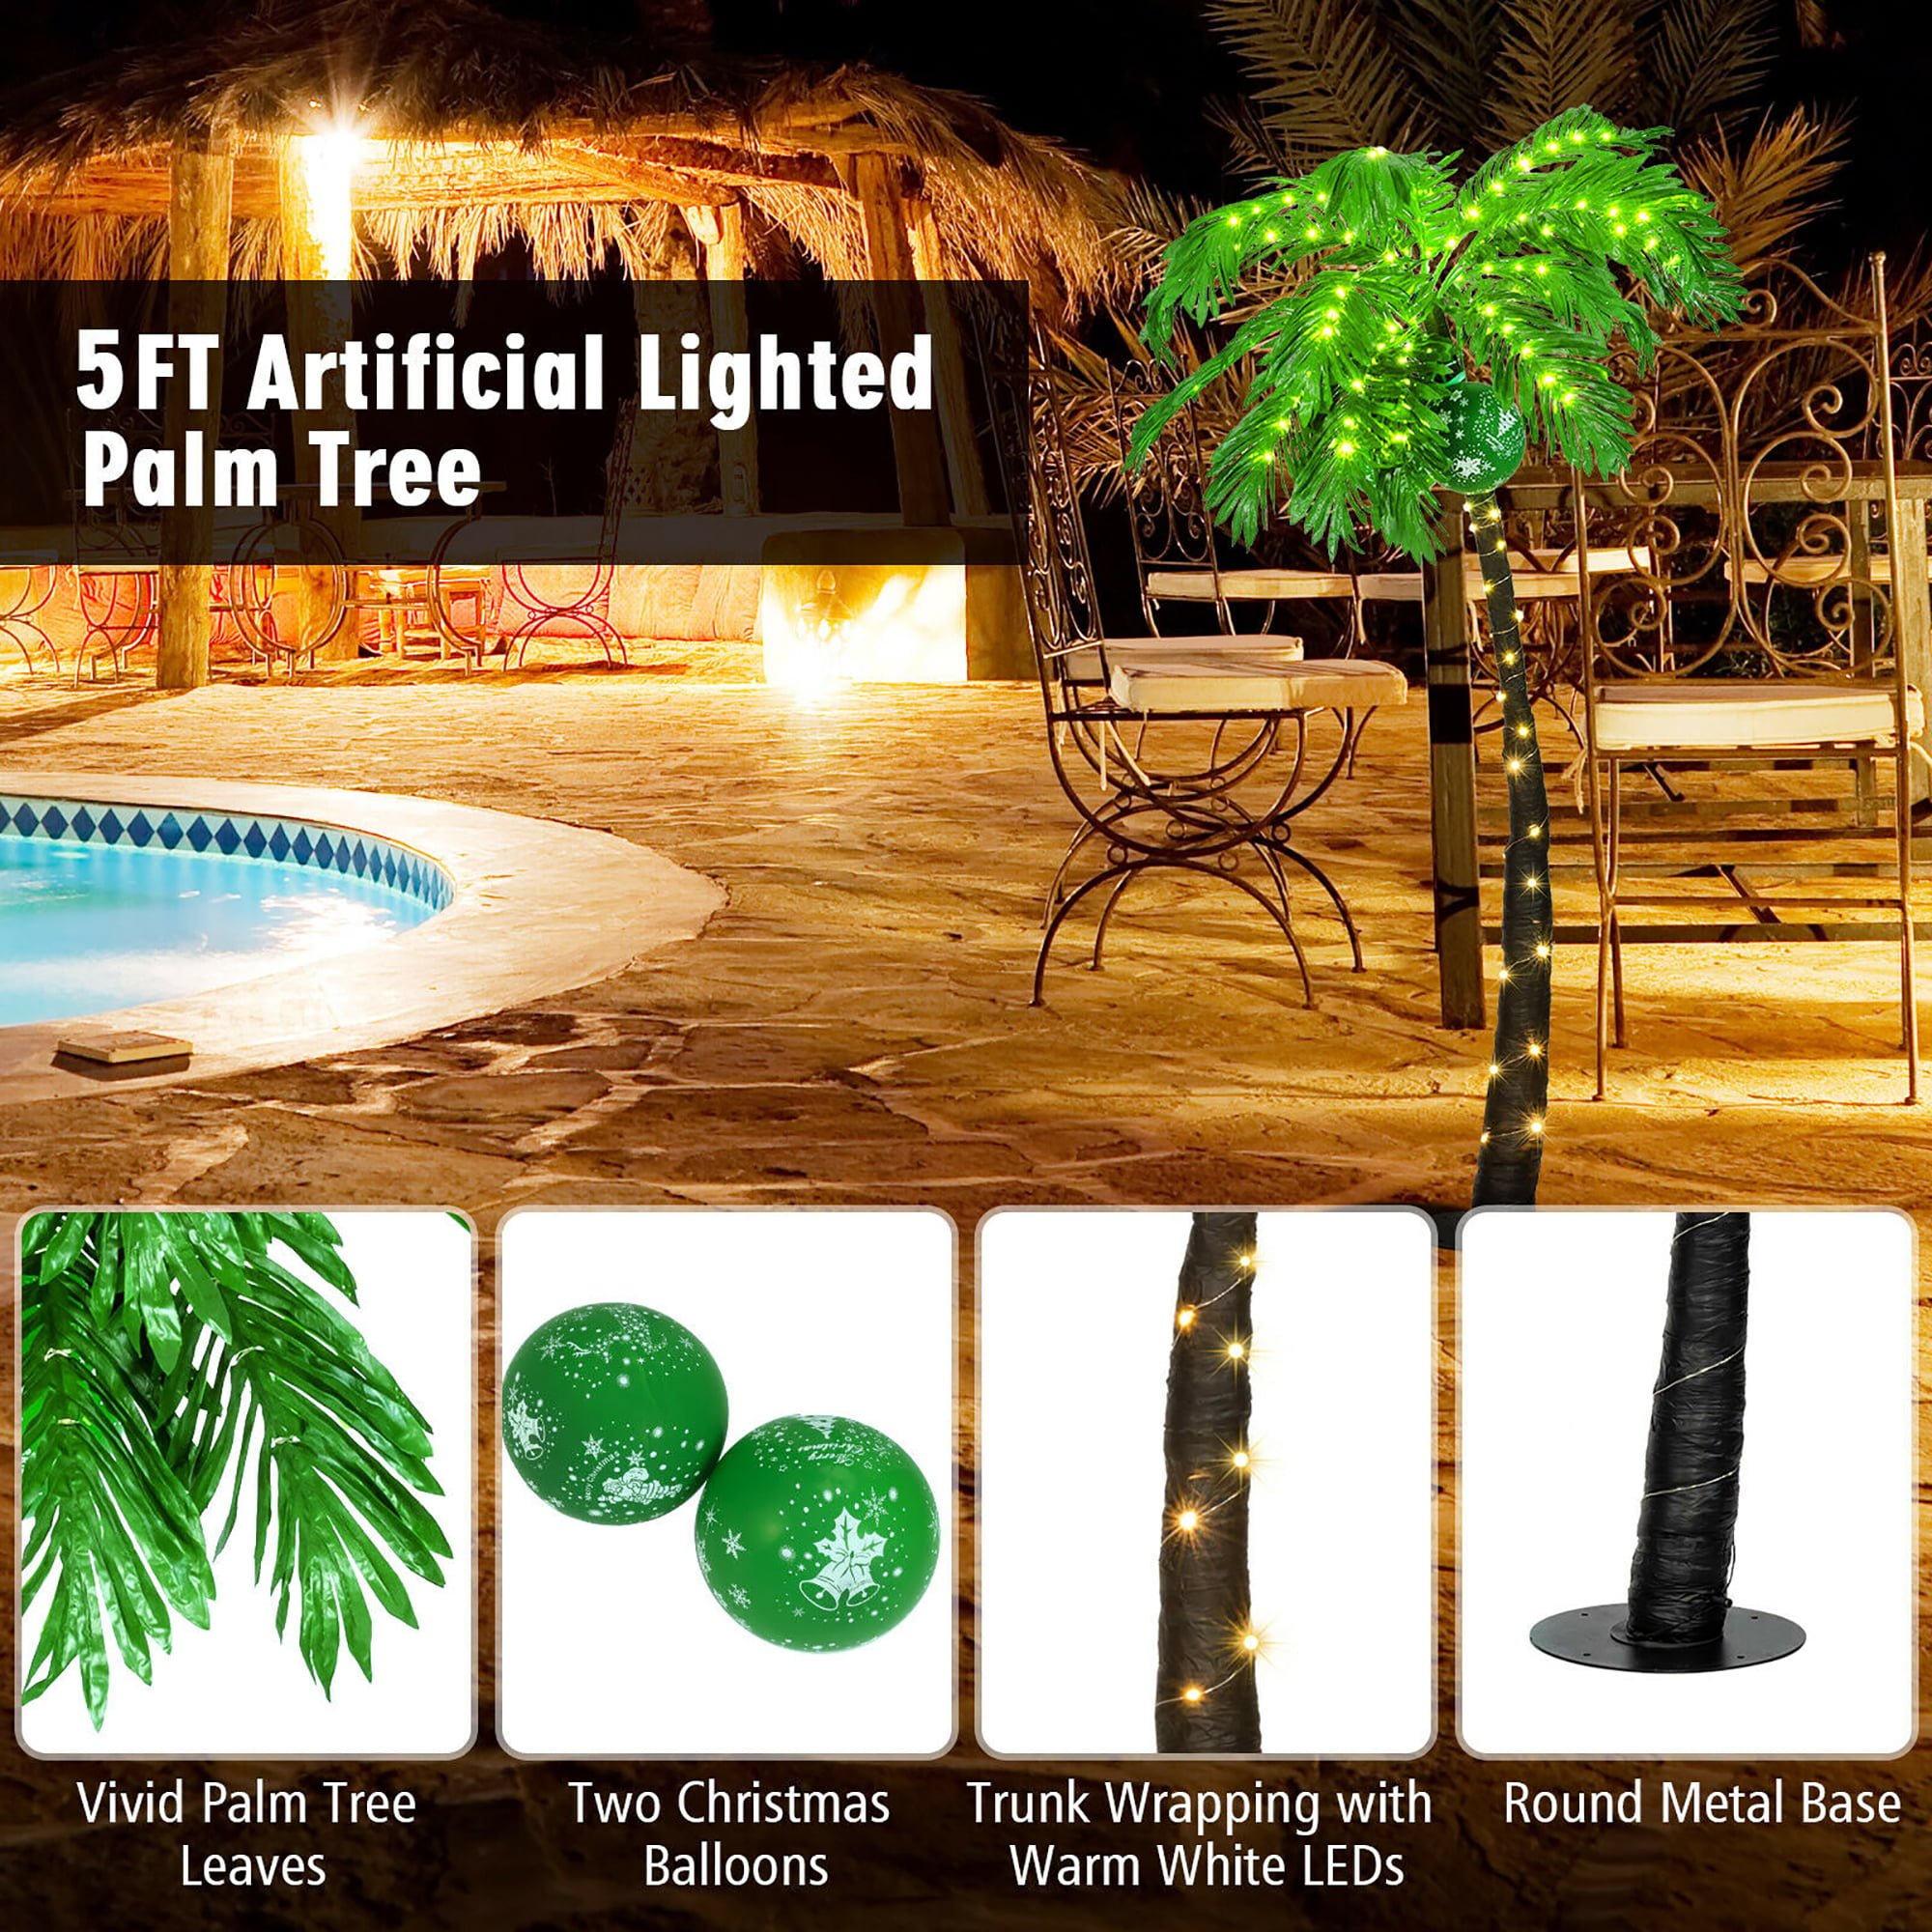 5 Ft Pre-lit Artificial Palm Tree Curve Trunk w/ Lights Home Pool Garden Decor 